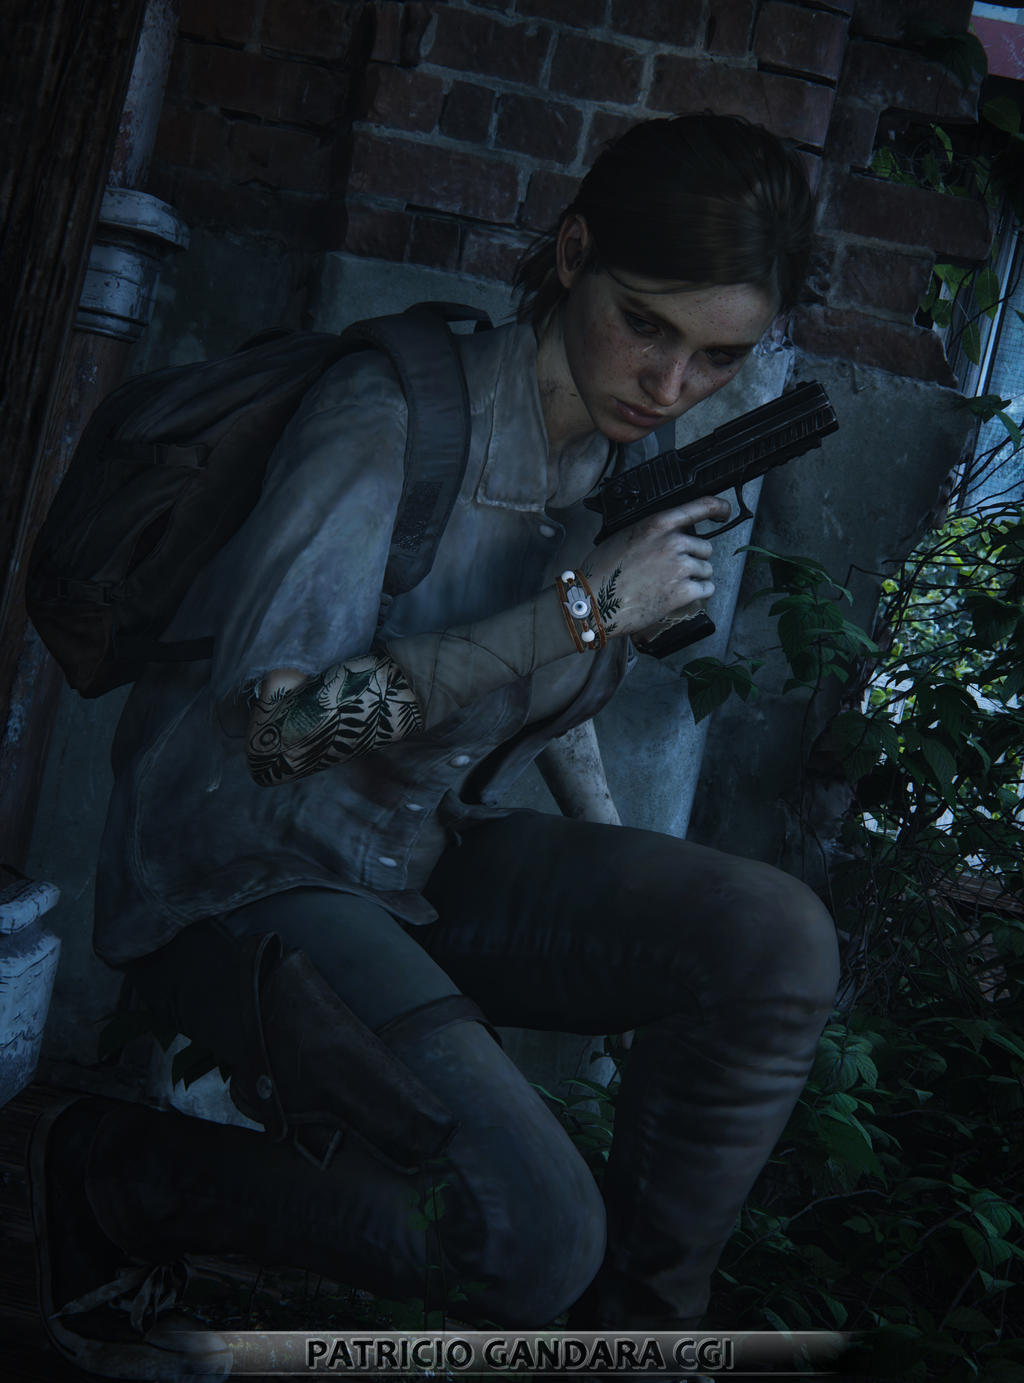 The Last of Us 2 Ellie by RPINr on DeviantArt